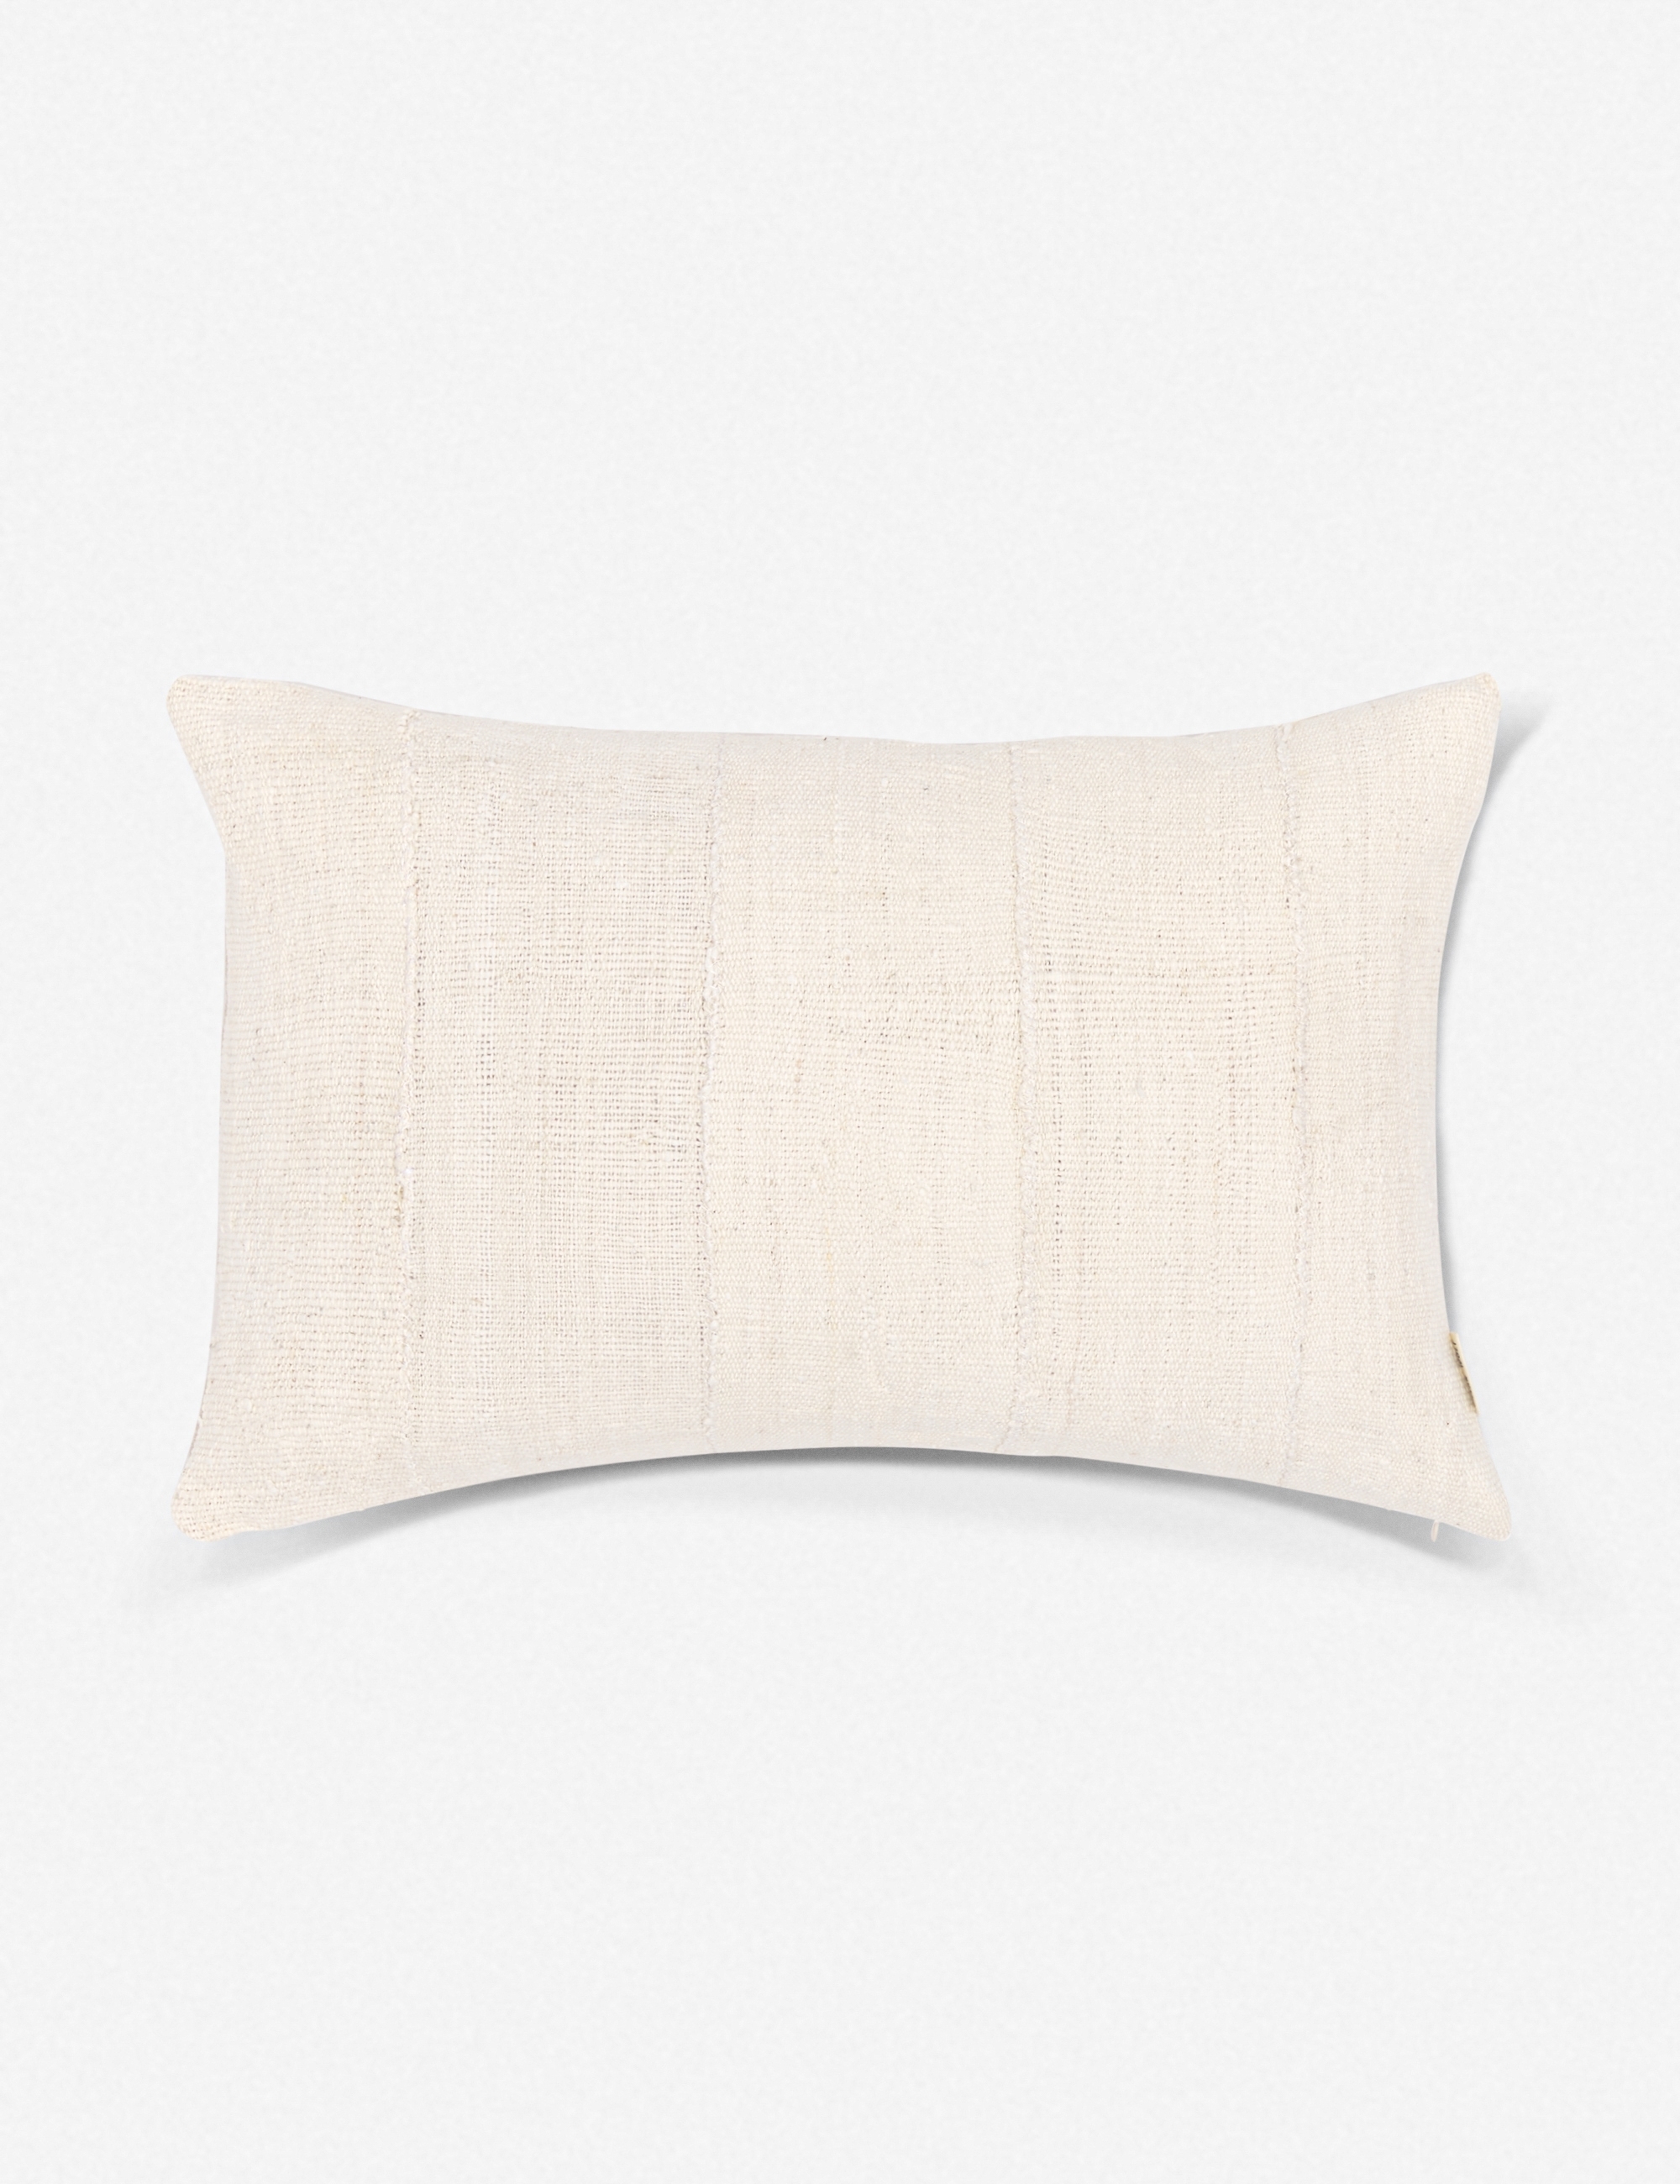 Norala One Of A Kind Mudcloth Lumbar Pillow - Image 0